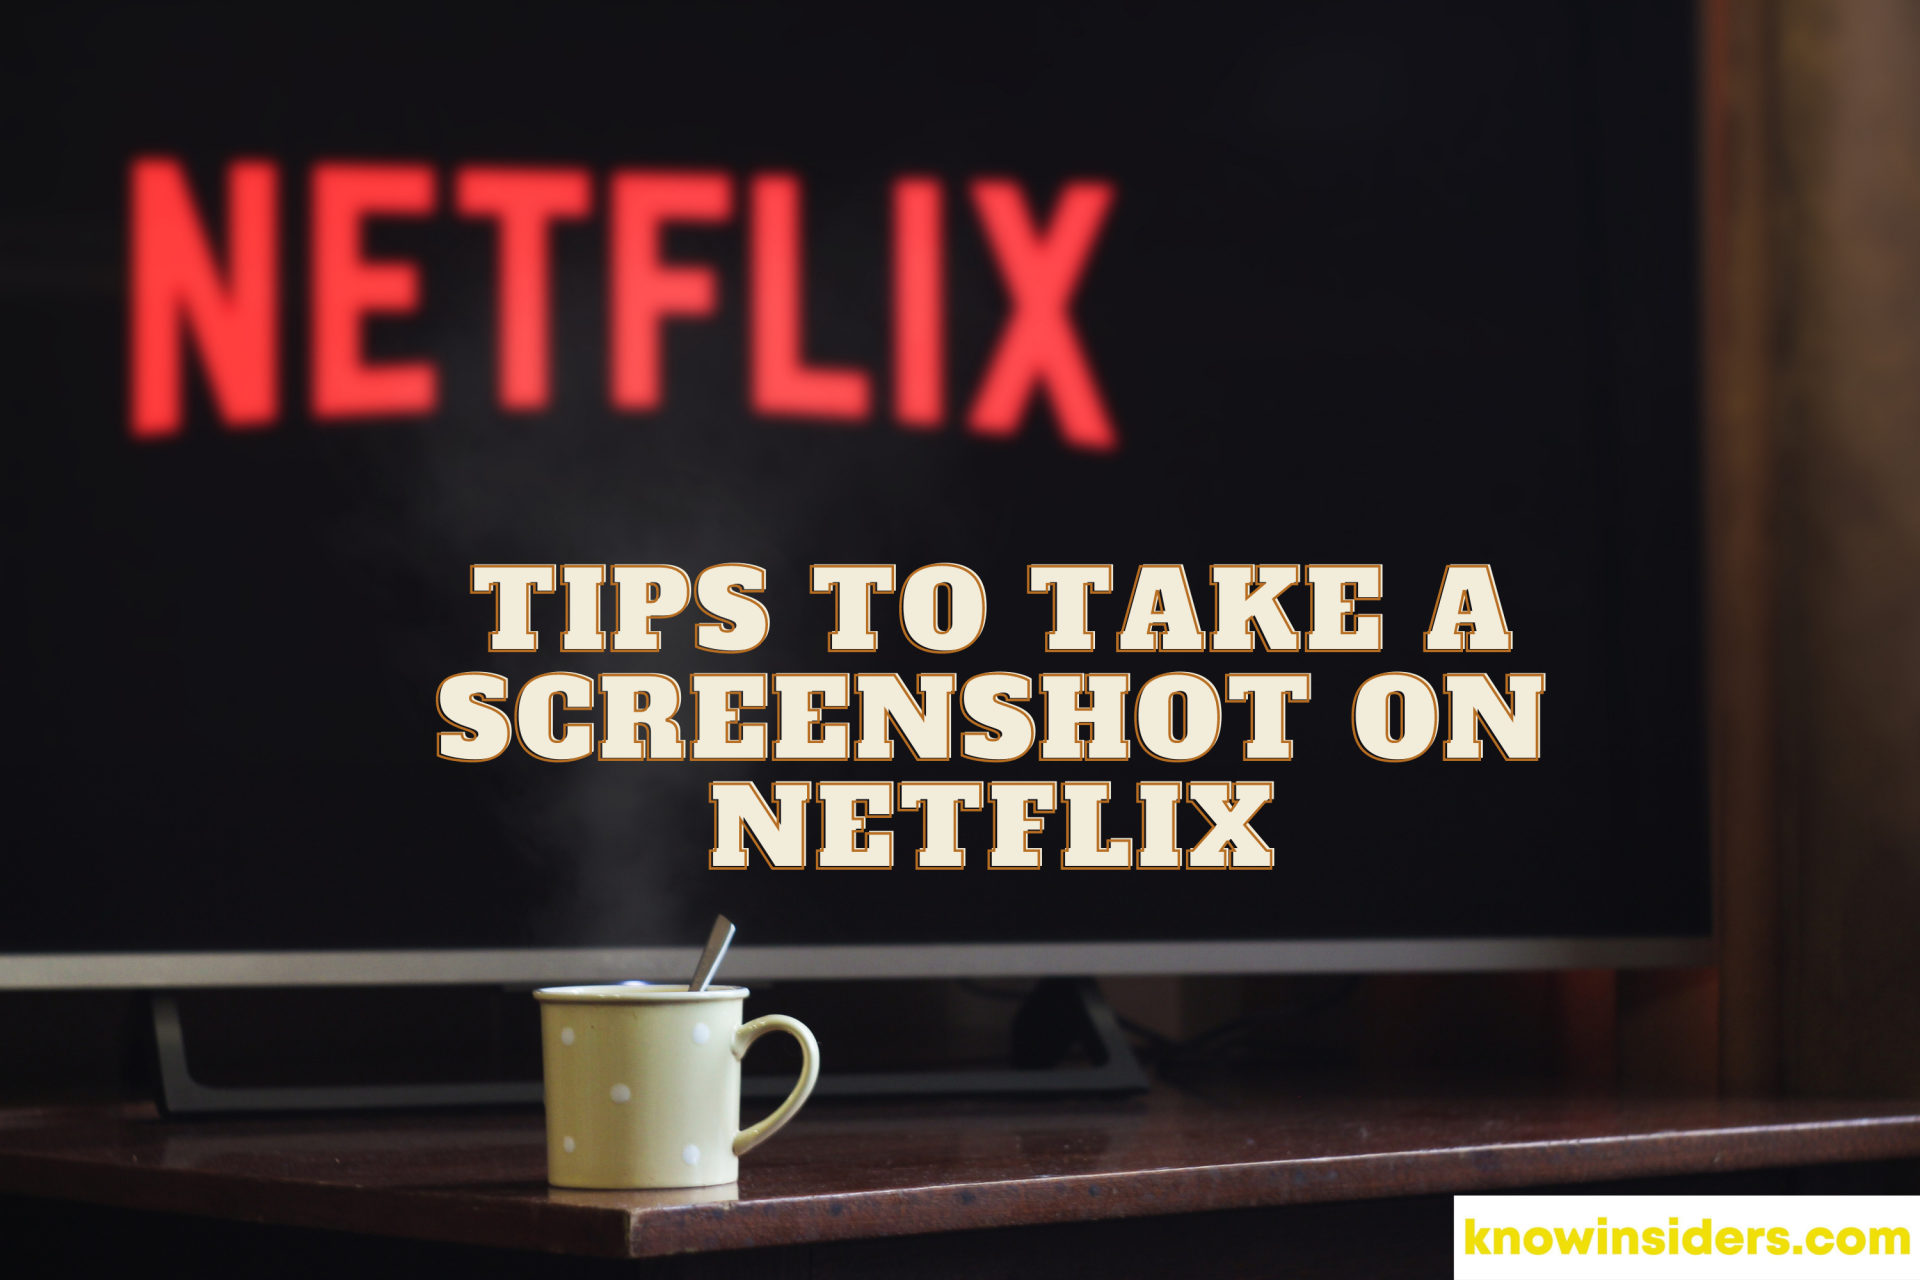 How to Screenshot Netflix - Three Ways to Capture